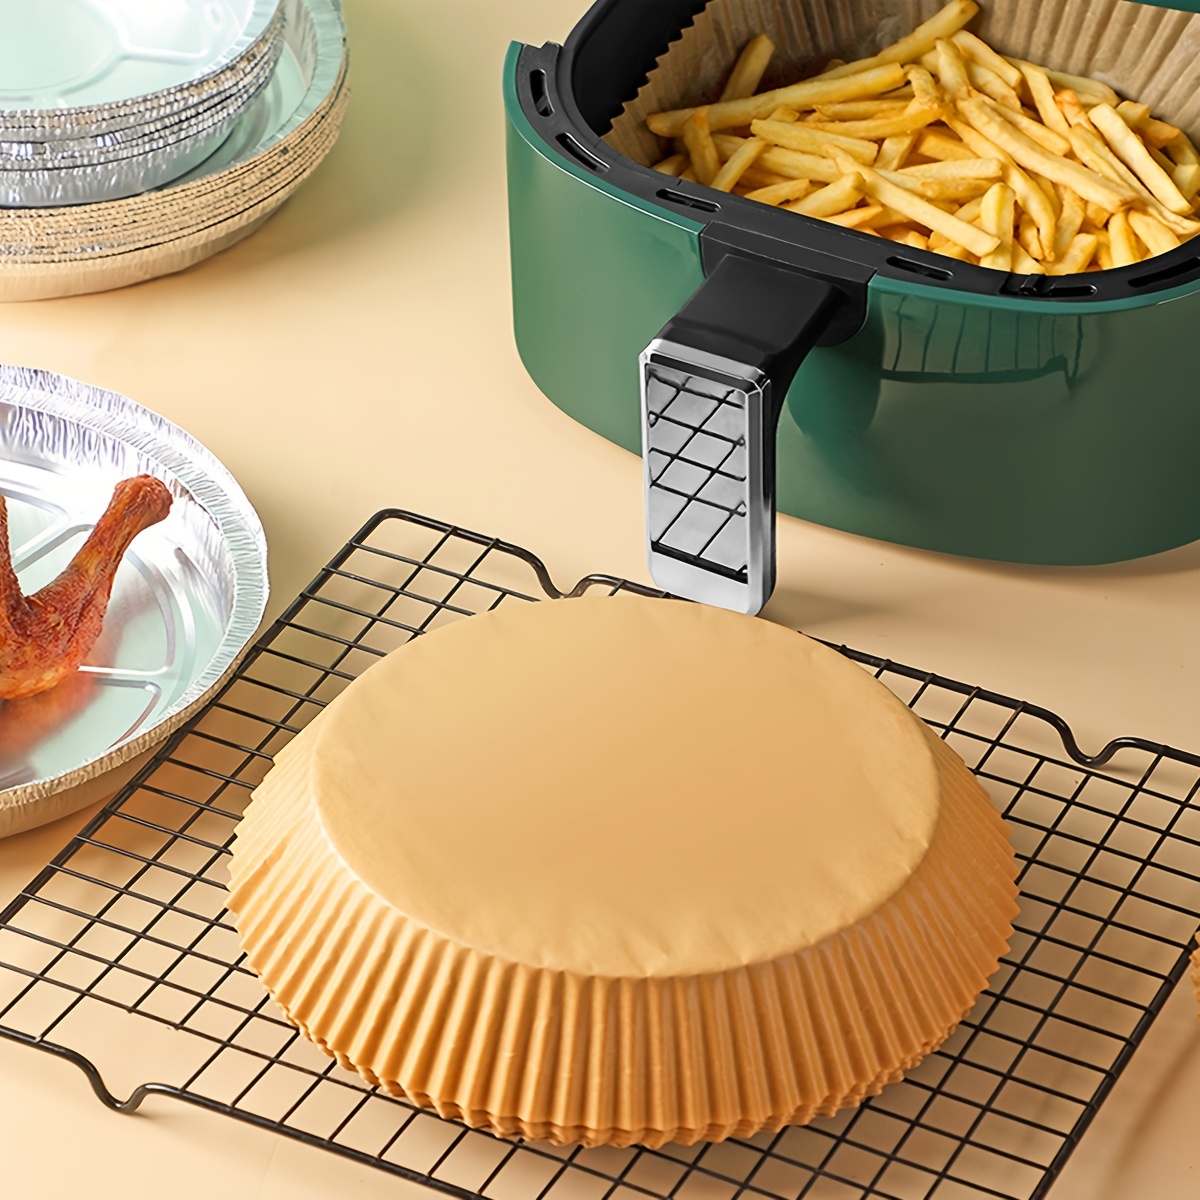 Kitchen Air Fryer Paper, Bake Oil-absorbing Papers Air Fryer